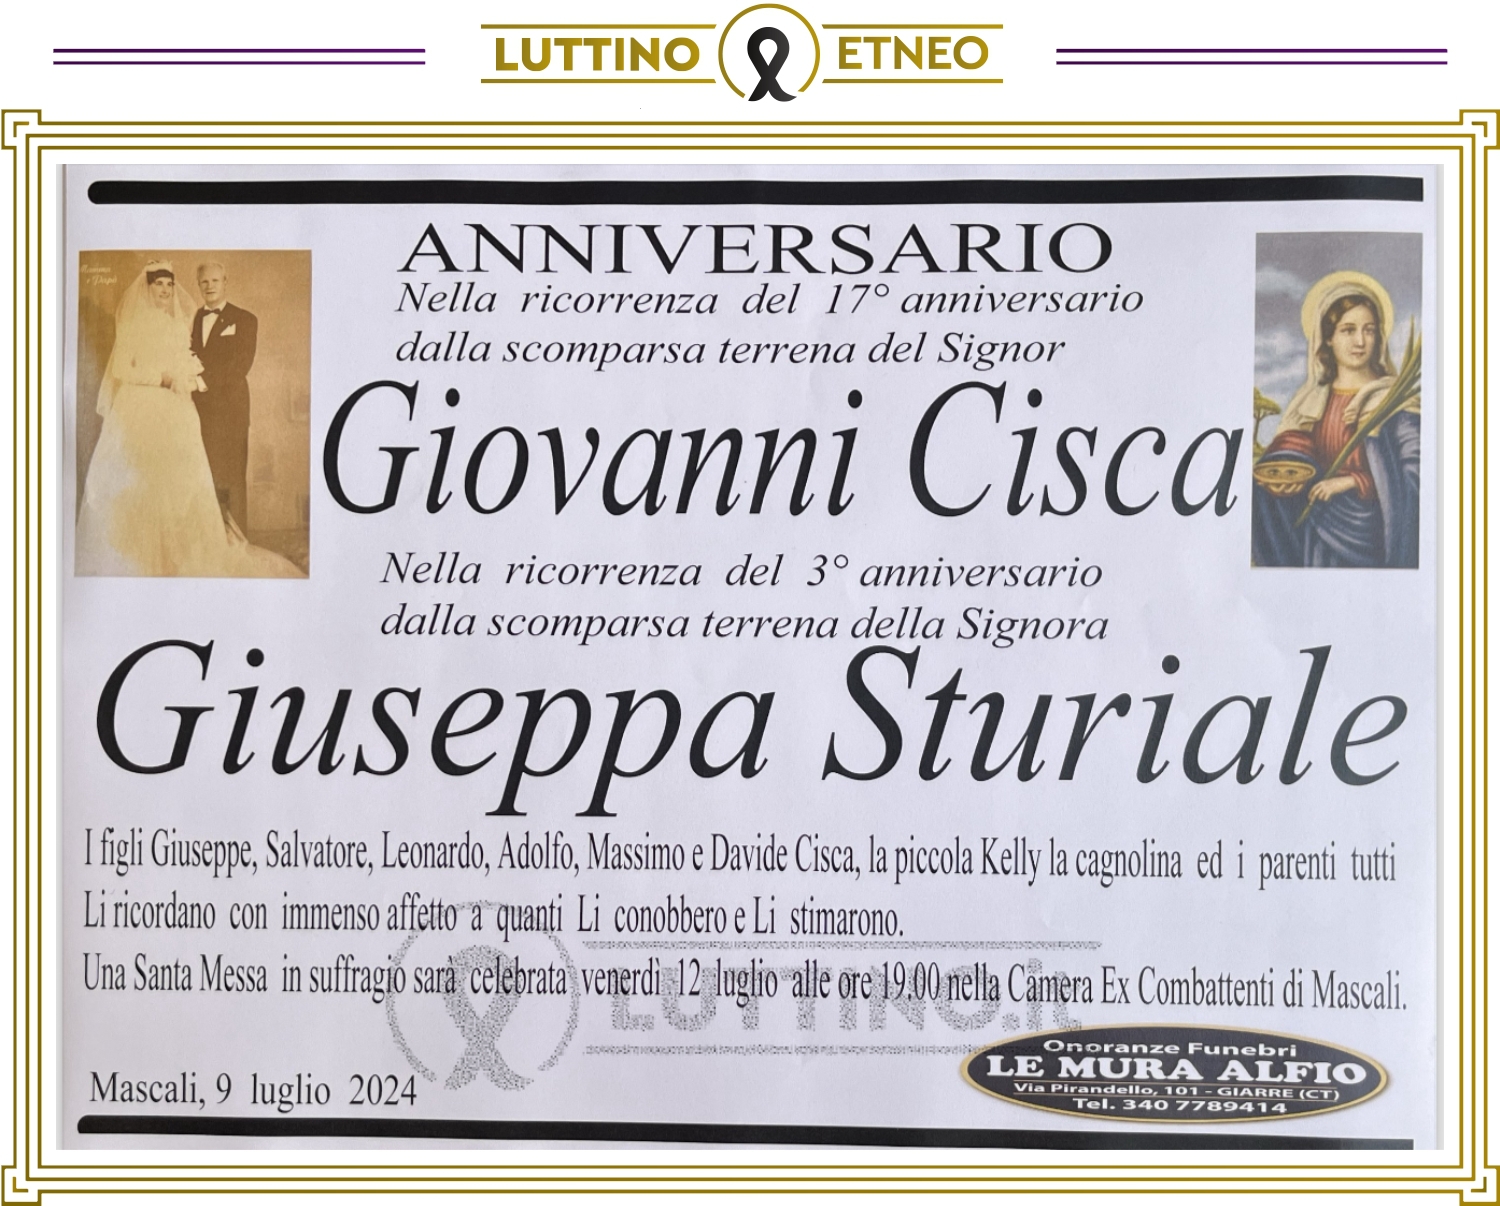 Giuseppa Sturiale e Giovanni Cisca 